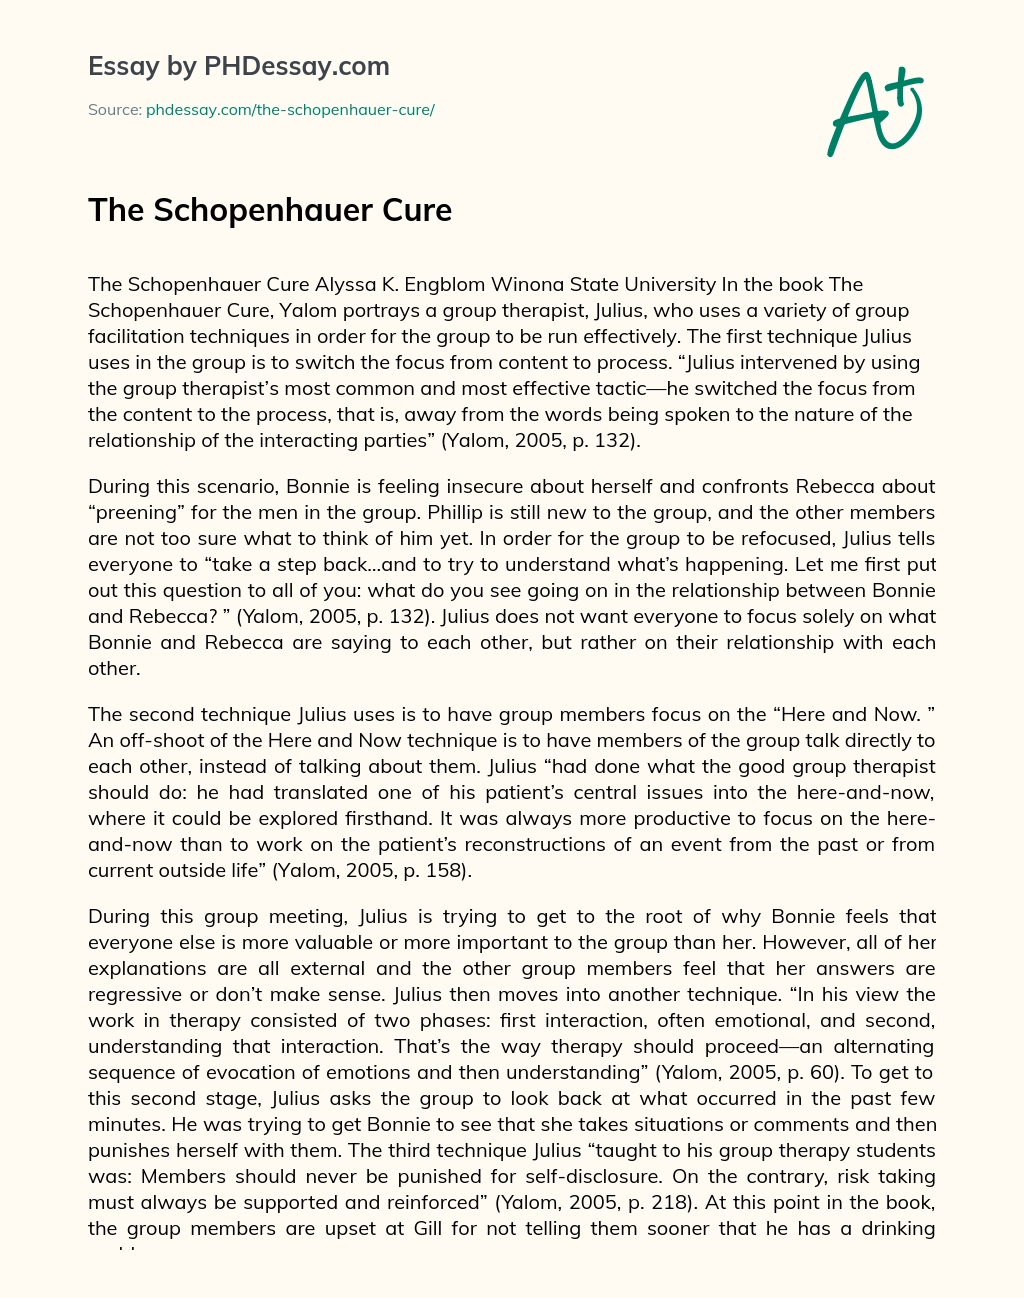 The Schopenhauer Cure essay